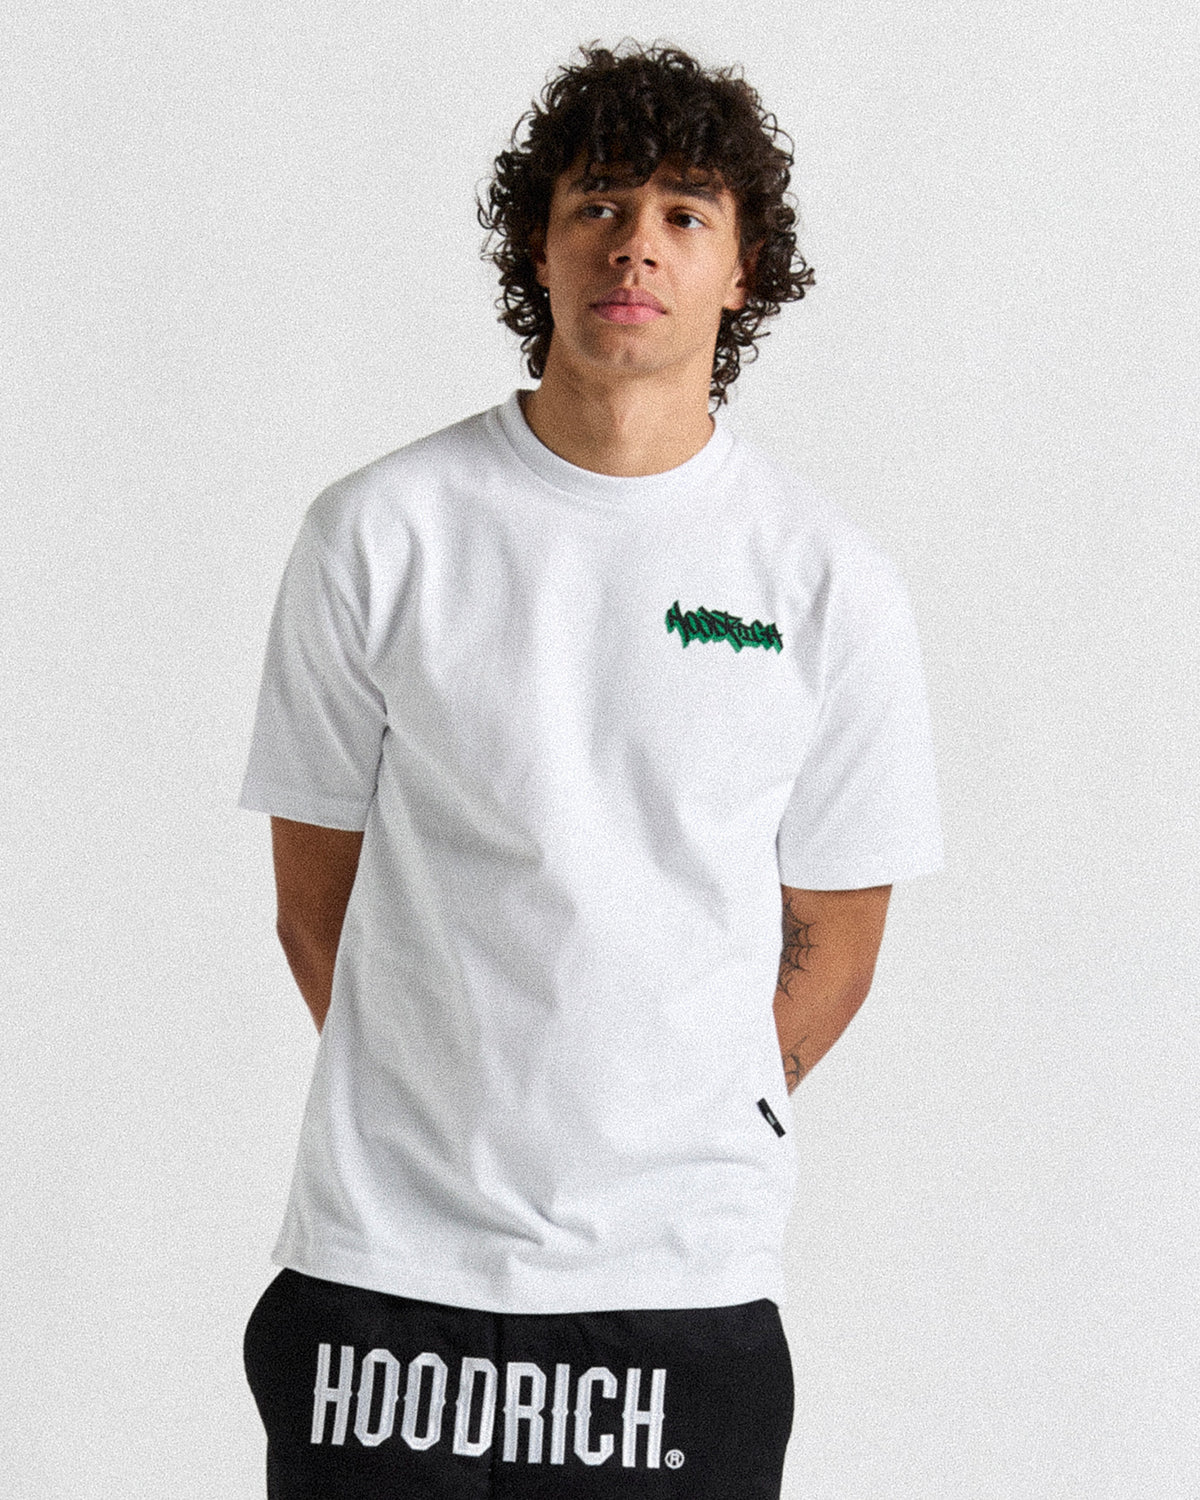 Graffiti Tag T-Shirt - White/Green/Black